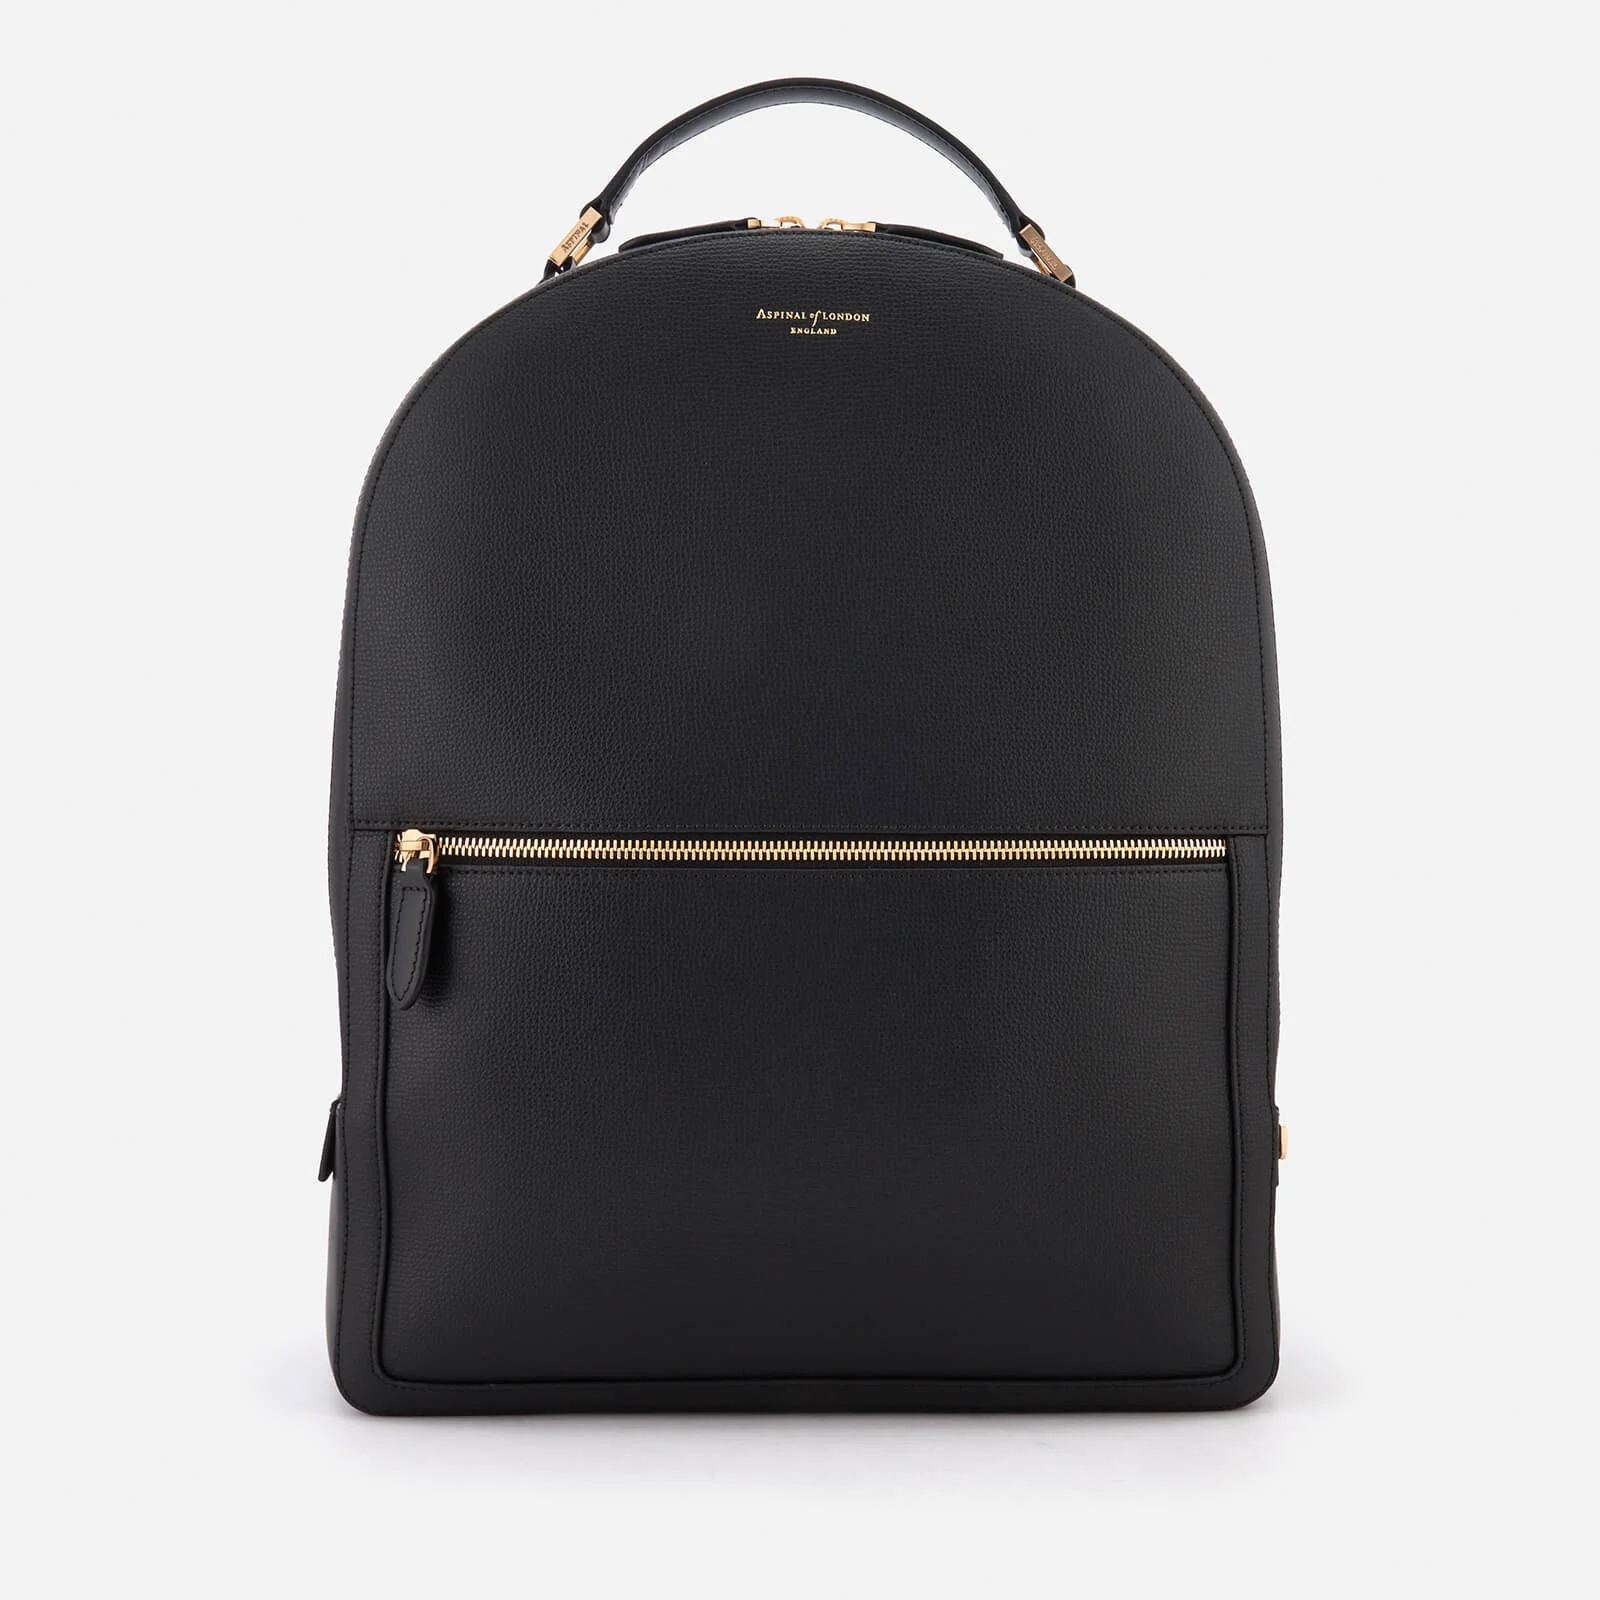 Aspinal of London Women's Mount Street Large Backpack - Black Image 1